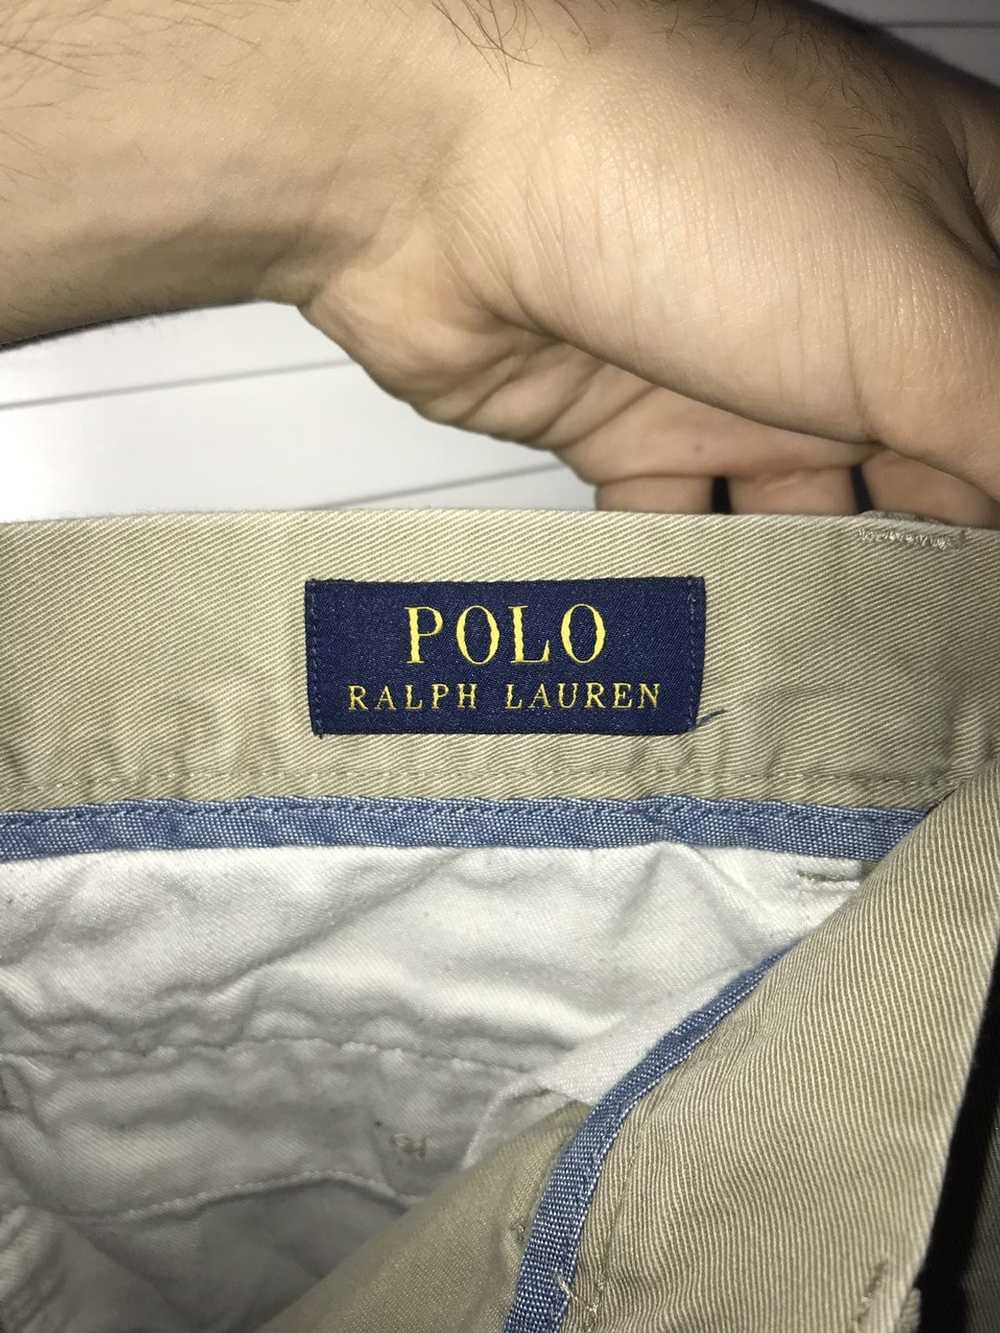 Polo Ralph Lauren Polo Ralph Lauren Khaki shorts - image 3